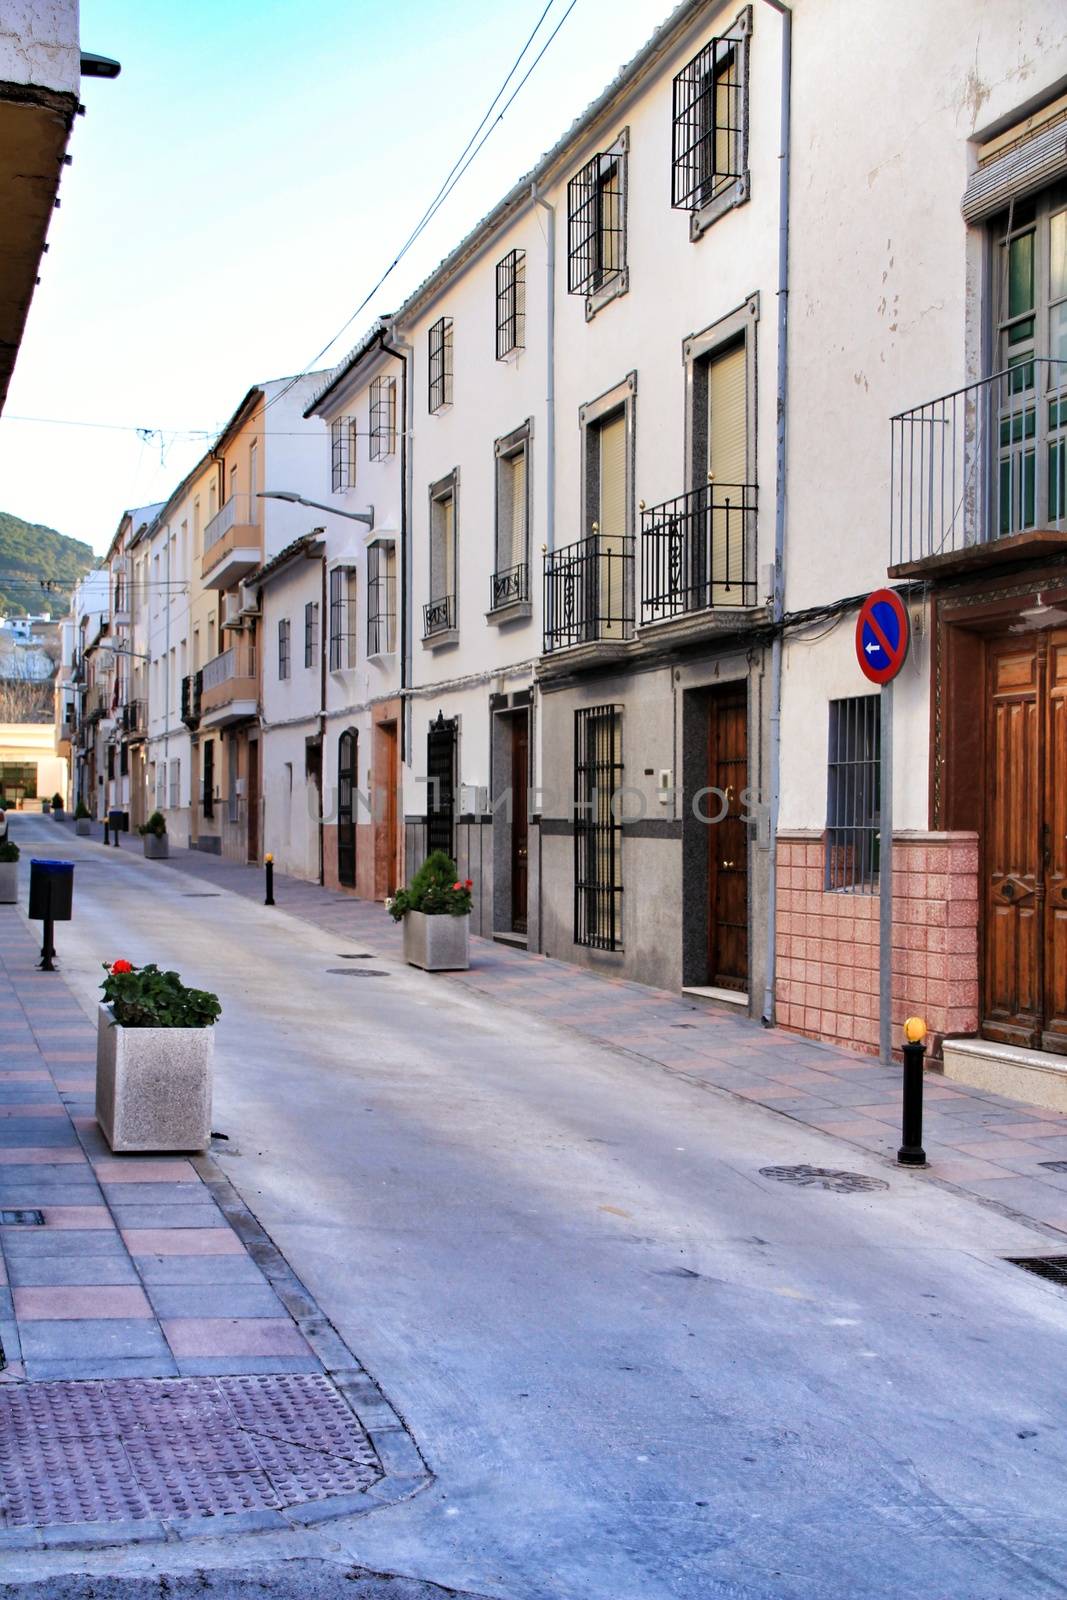 Narrow streets in Rute village in Cordoba province, Spain.